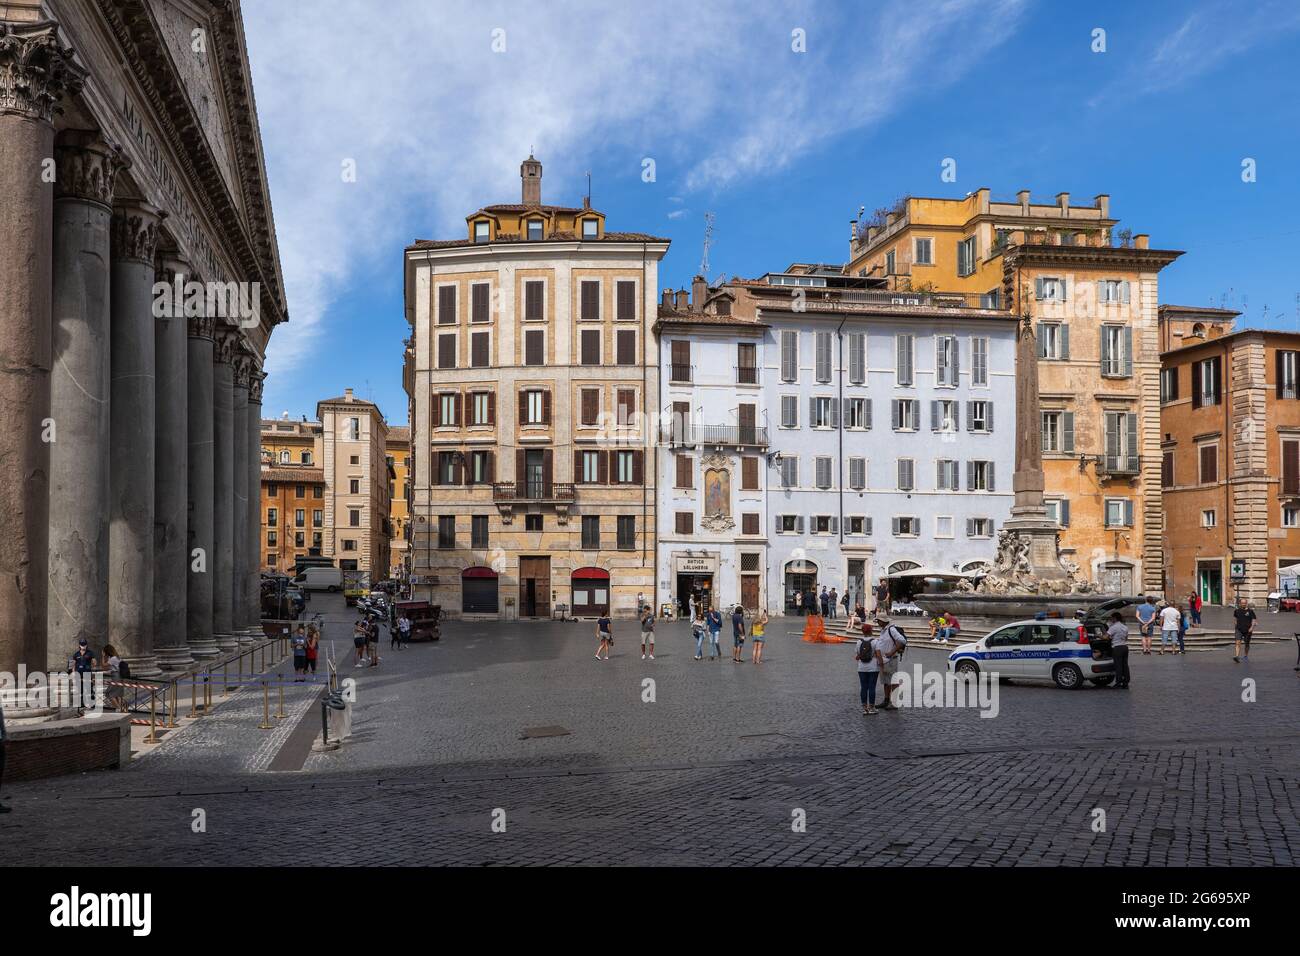 Rome, Italy - September 2, 2020: Piazza della Rotonda square, Pantheon temple on the left, city landmark. Stock Photo